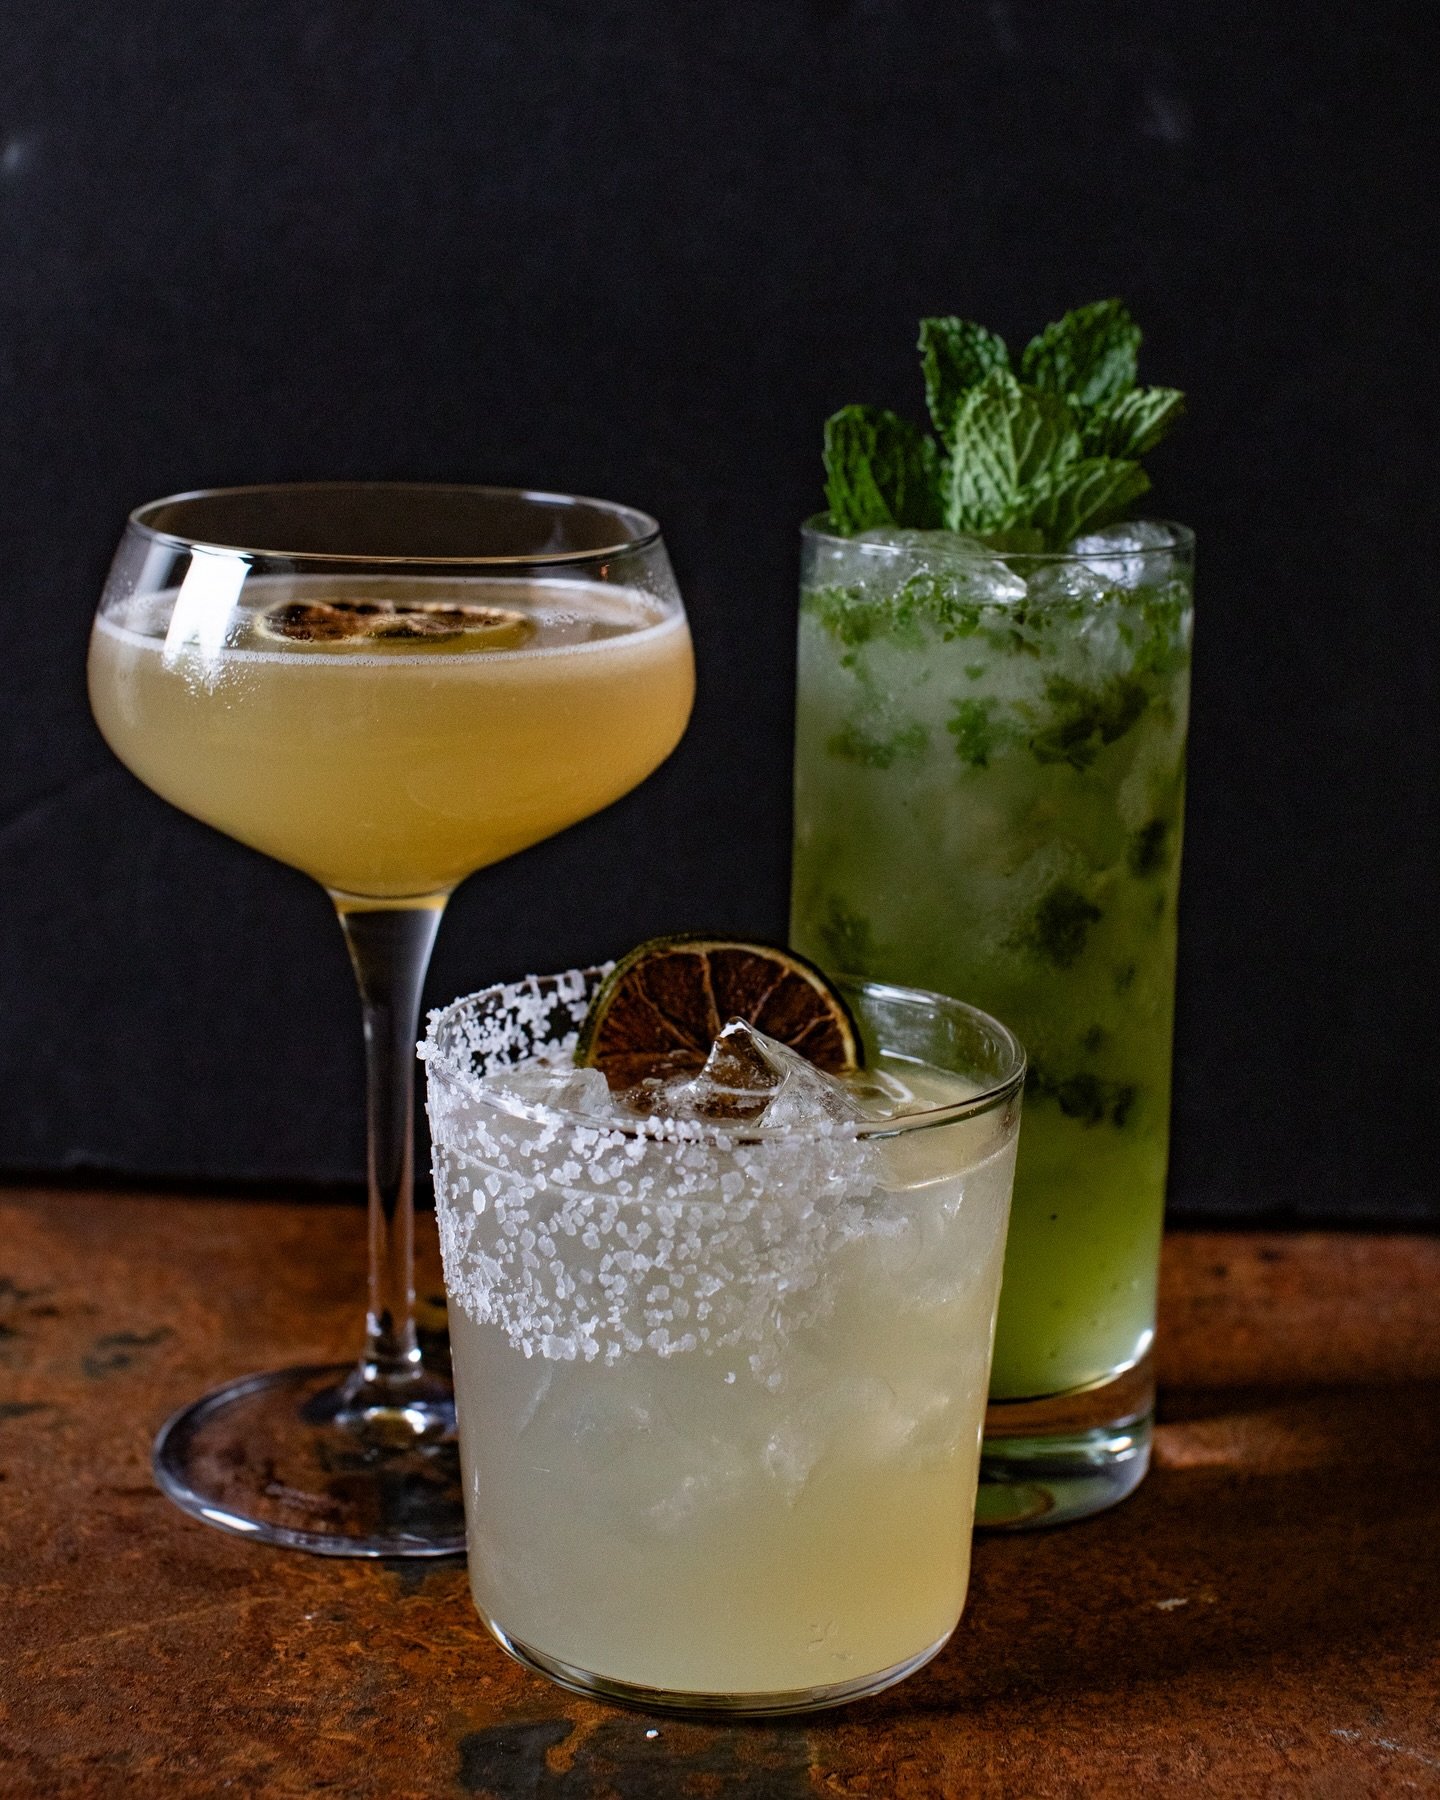 The three Classic Latin Cocktails: Daiquiri, Mojito, Caipirinha.
.
.
.
.
#latincocktails #cocktailbar #happyhour #visitbaltimore